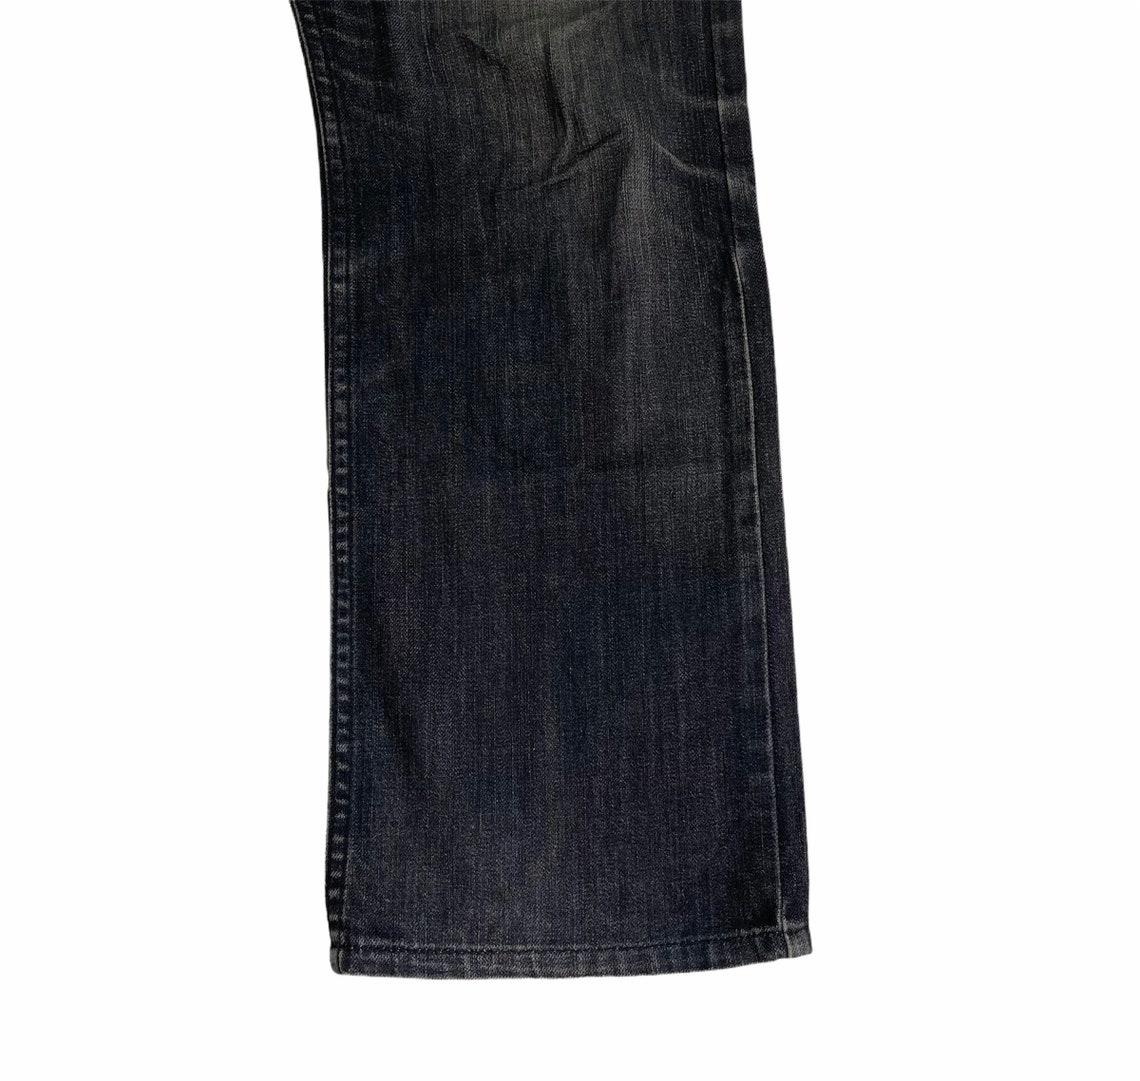 Vintage Muji Japan Jeans Denim Pants Faded Black | Etsy